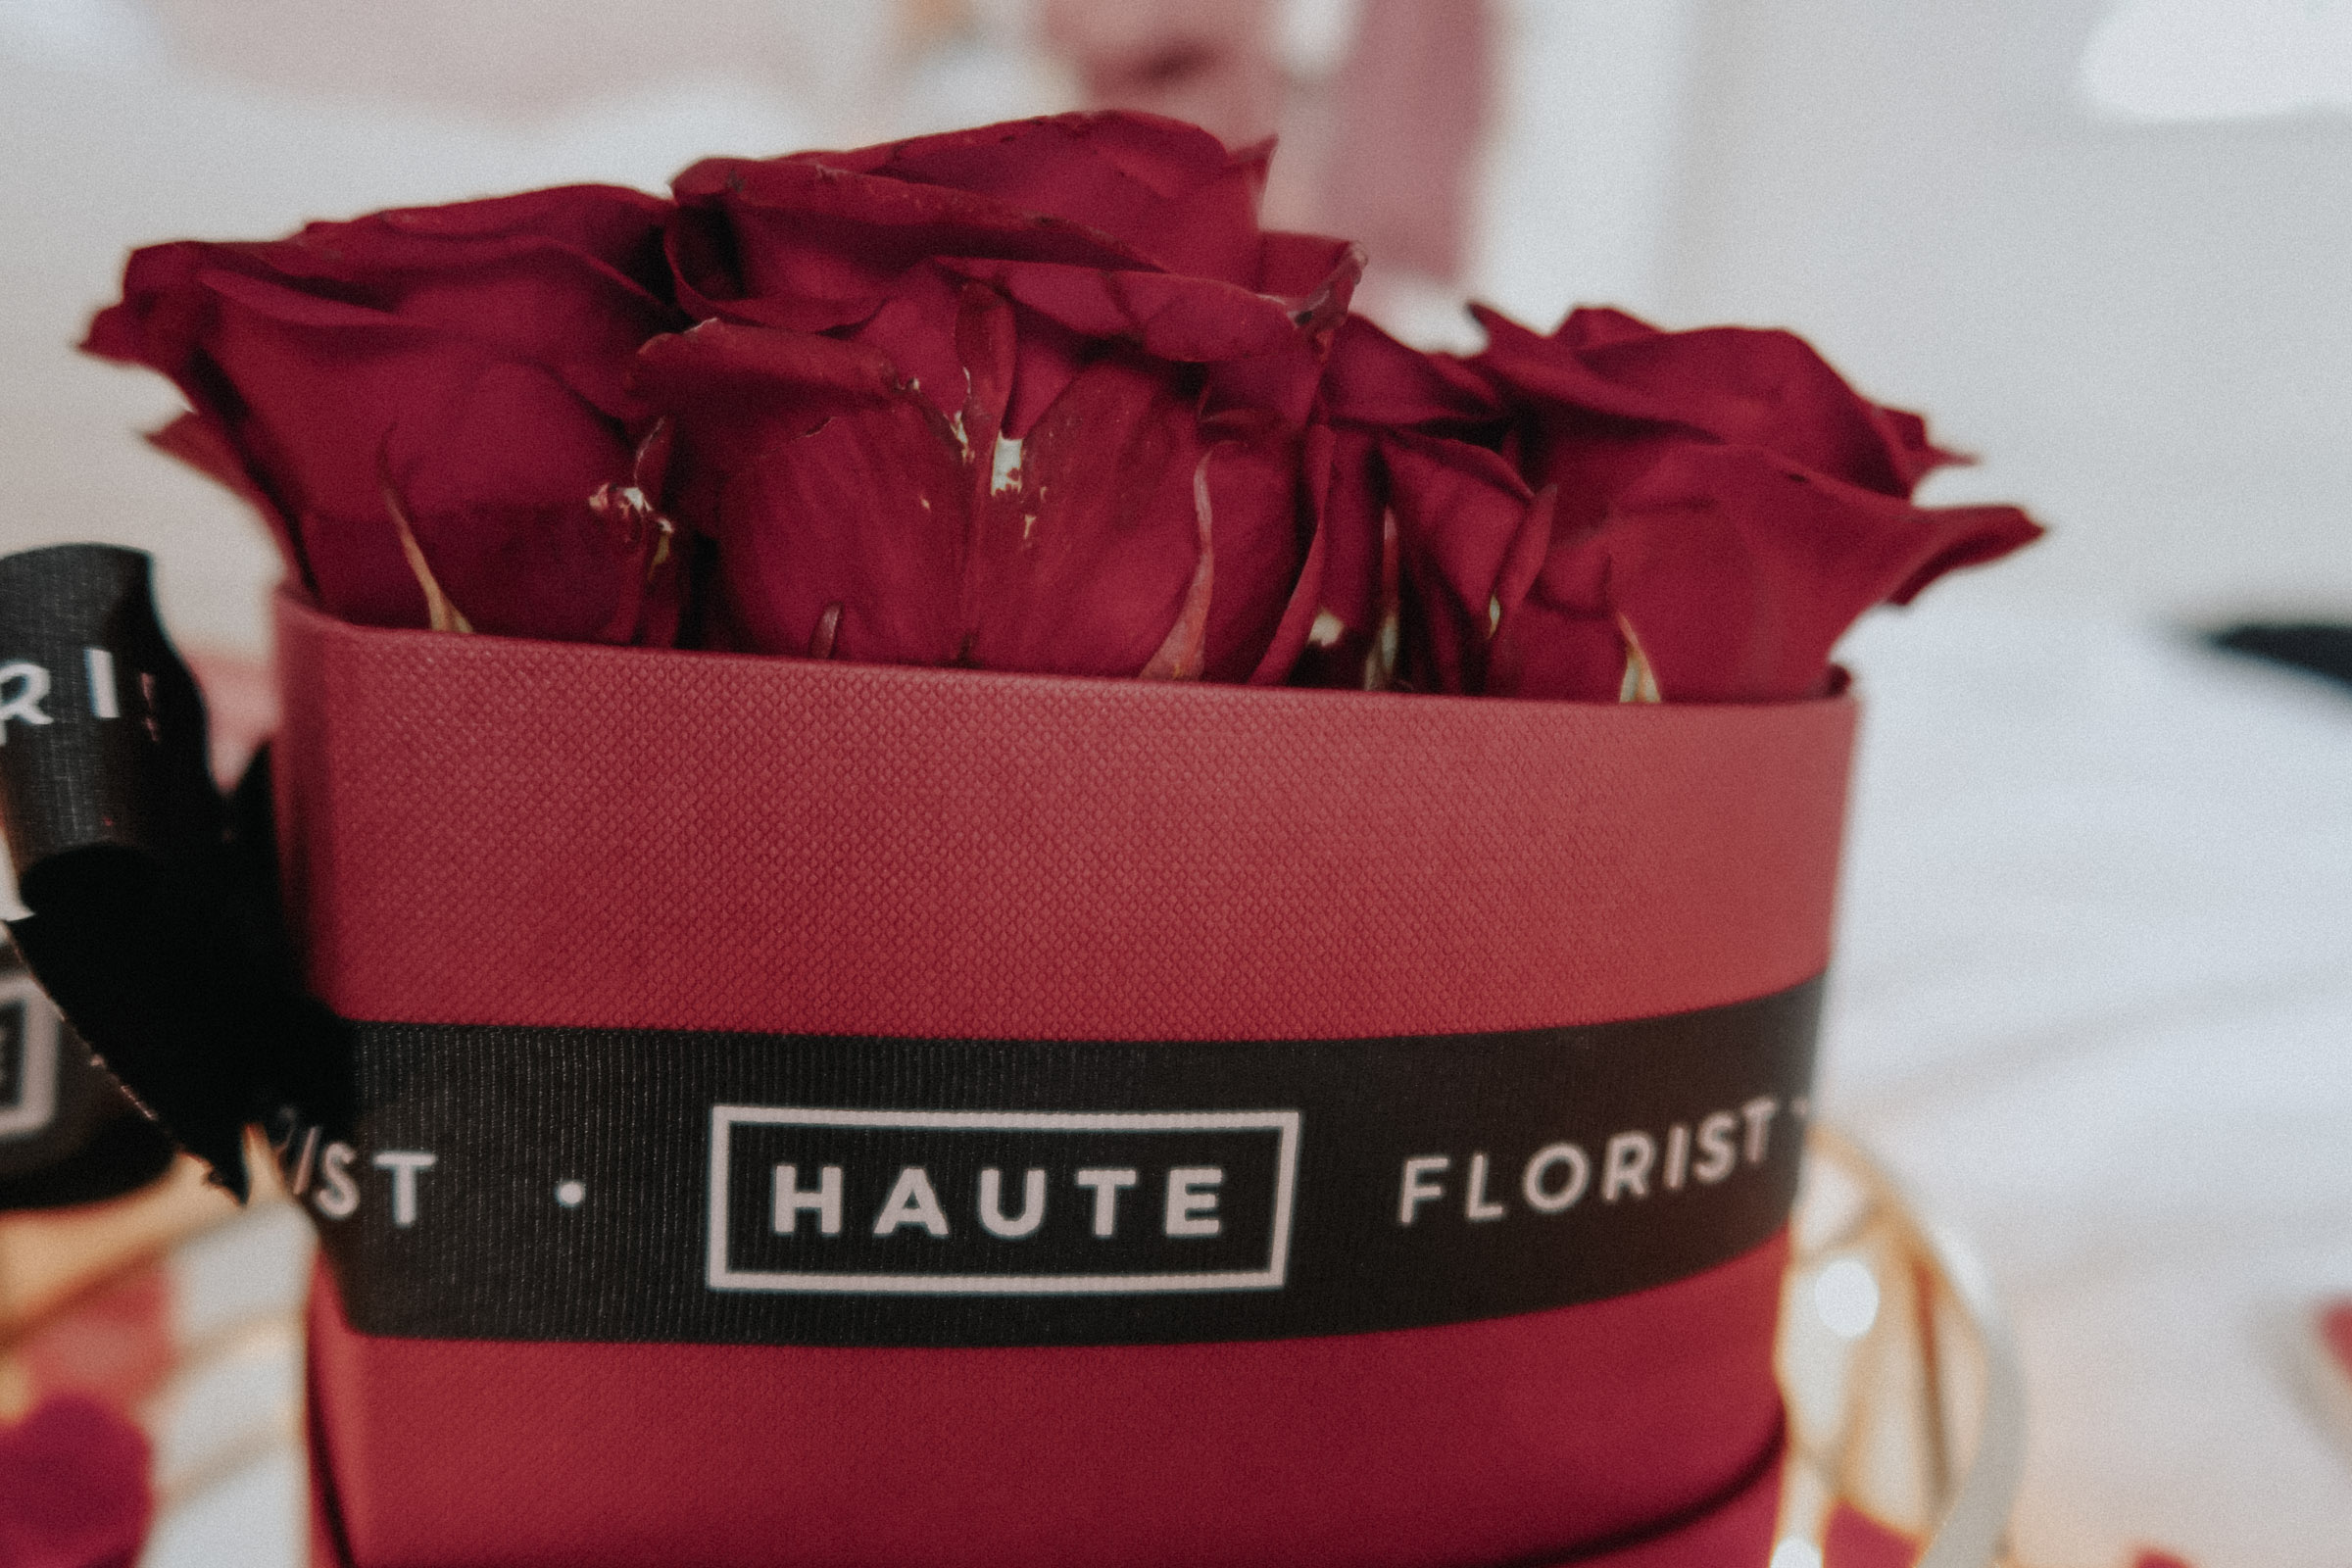 Haute Florist heart shaped hatbox